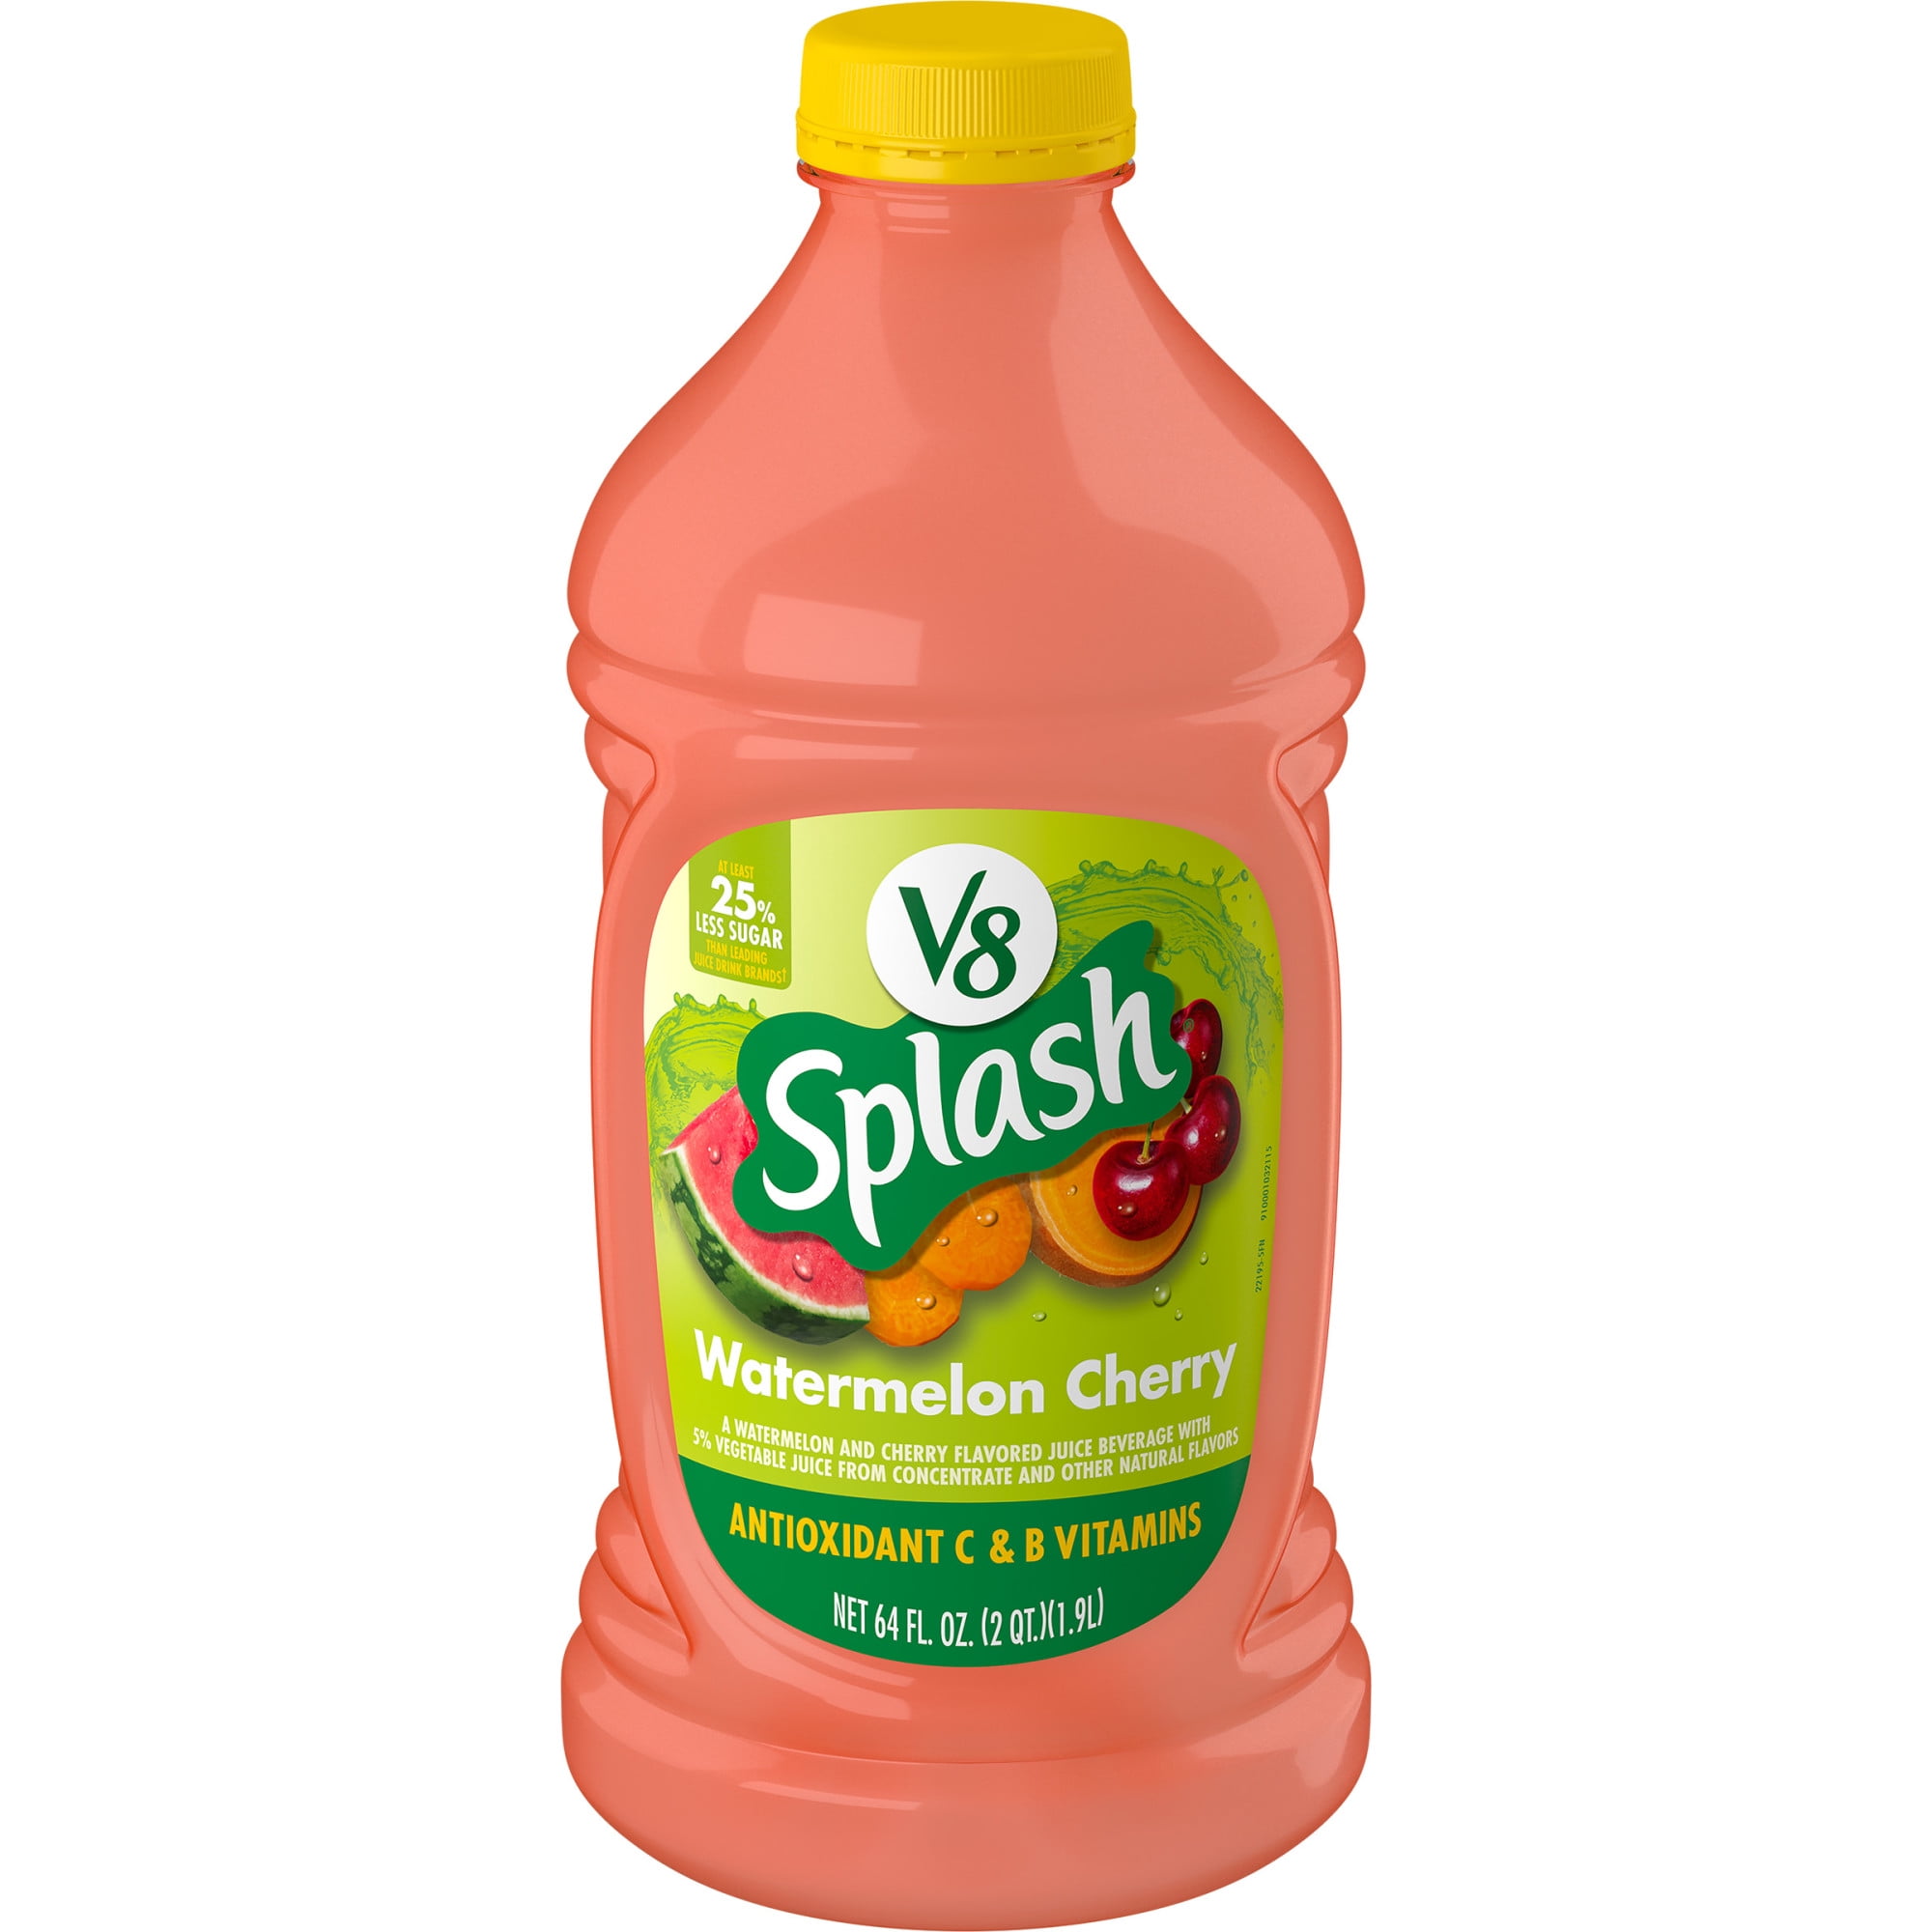 V8 Splash Watermelon Cherry Juice Beverage, 64 FL OZ Bottle